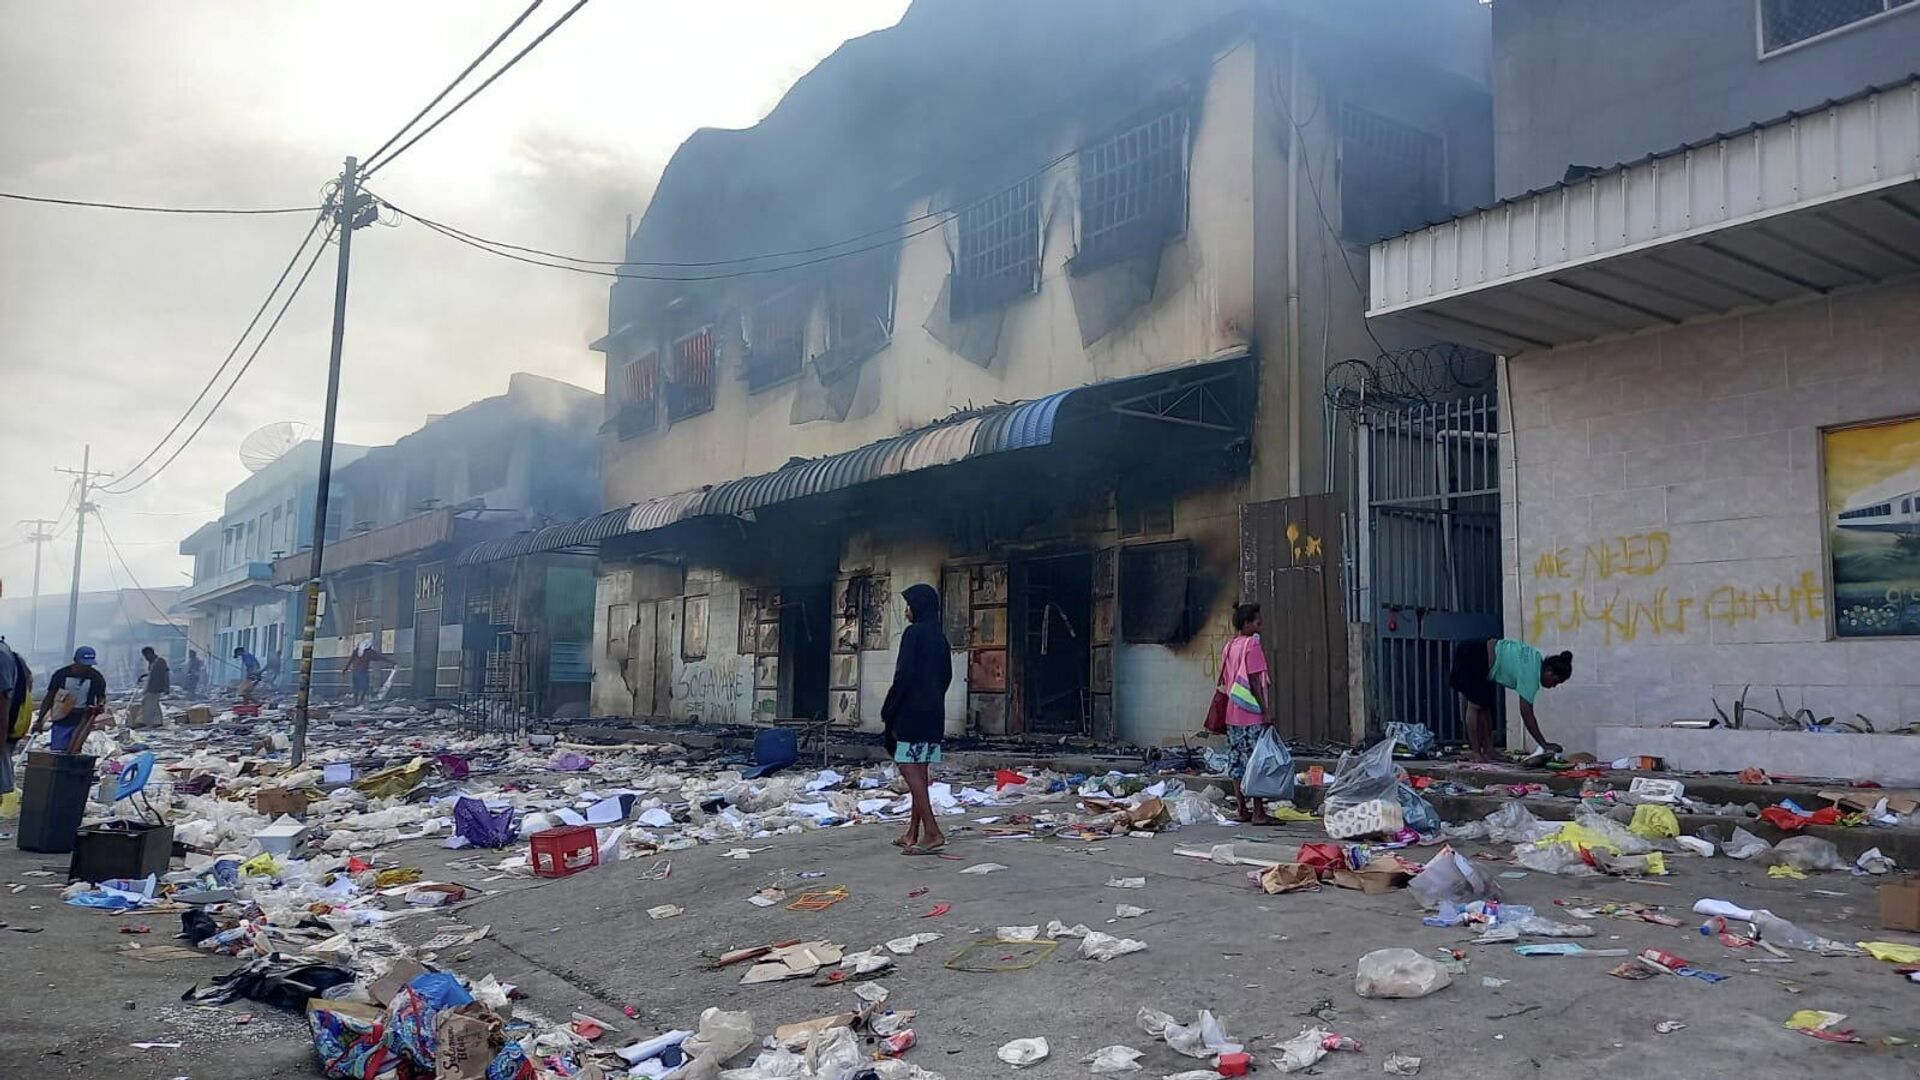 People stand amid debris in front of a burned-out building after days of unrest in Honiara, Solomon Islands November 26, 2021. - Sputnik International, 1920, 27.11.2021